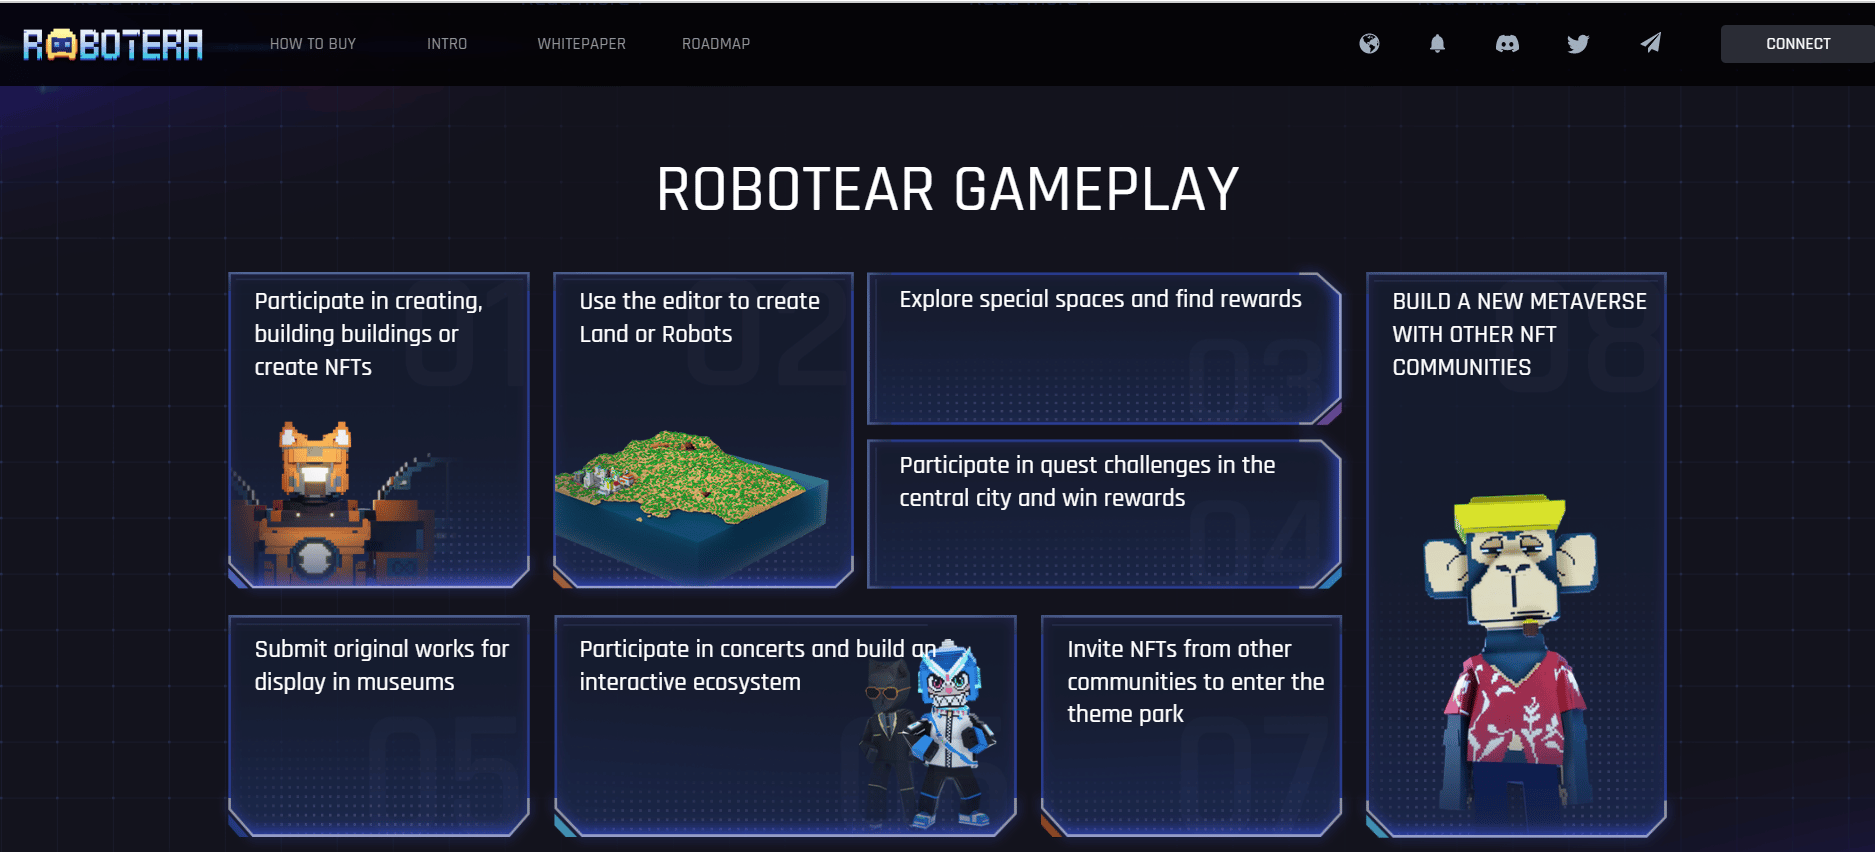 Comment acheter RobotEra